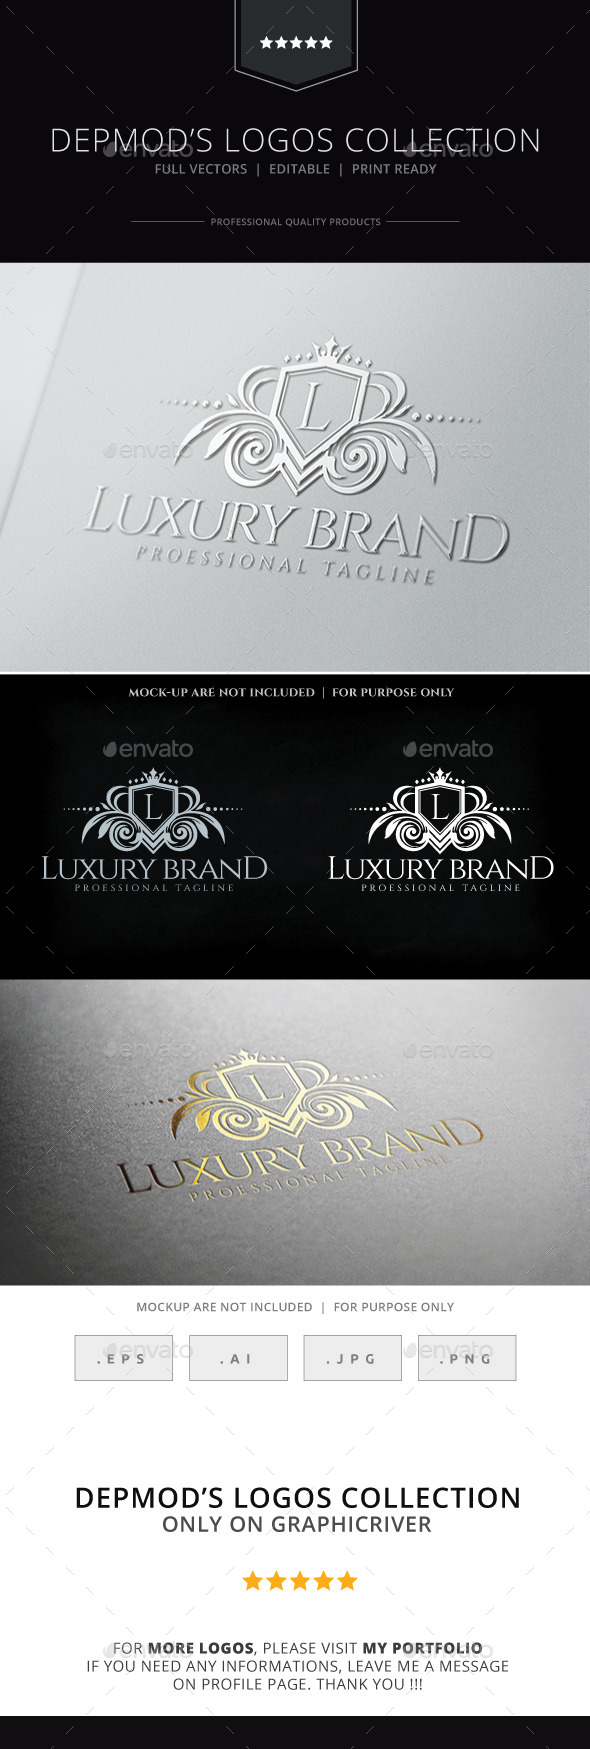 Luxury Brand Logo